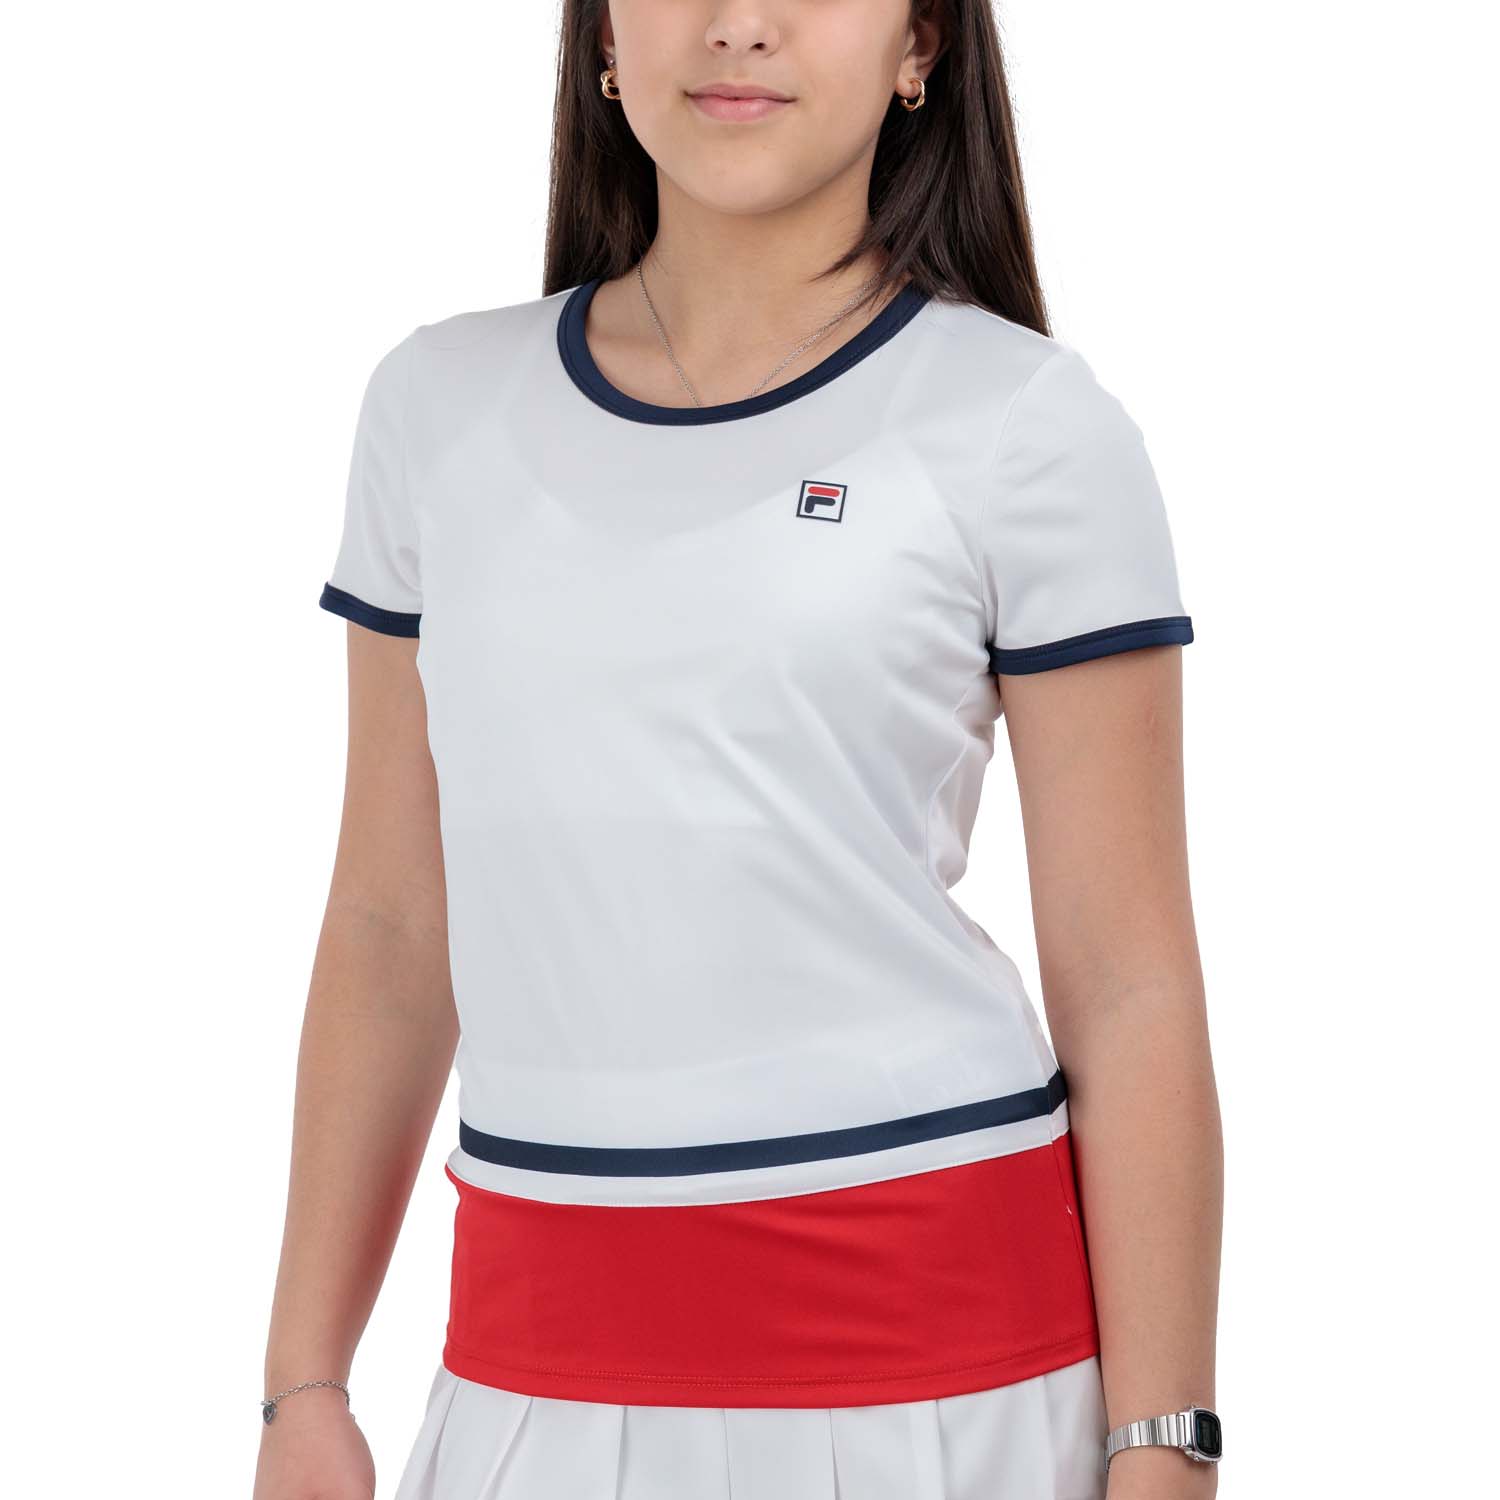 Fila Elisabeth T-Shirt Girl - White/Red